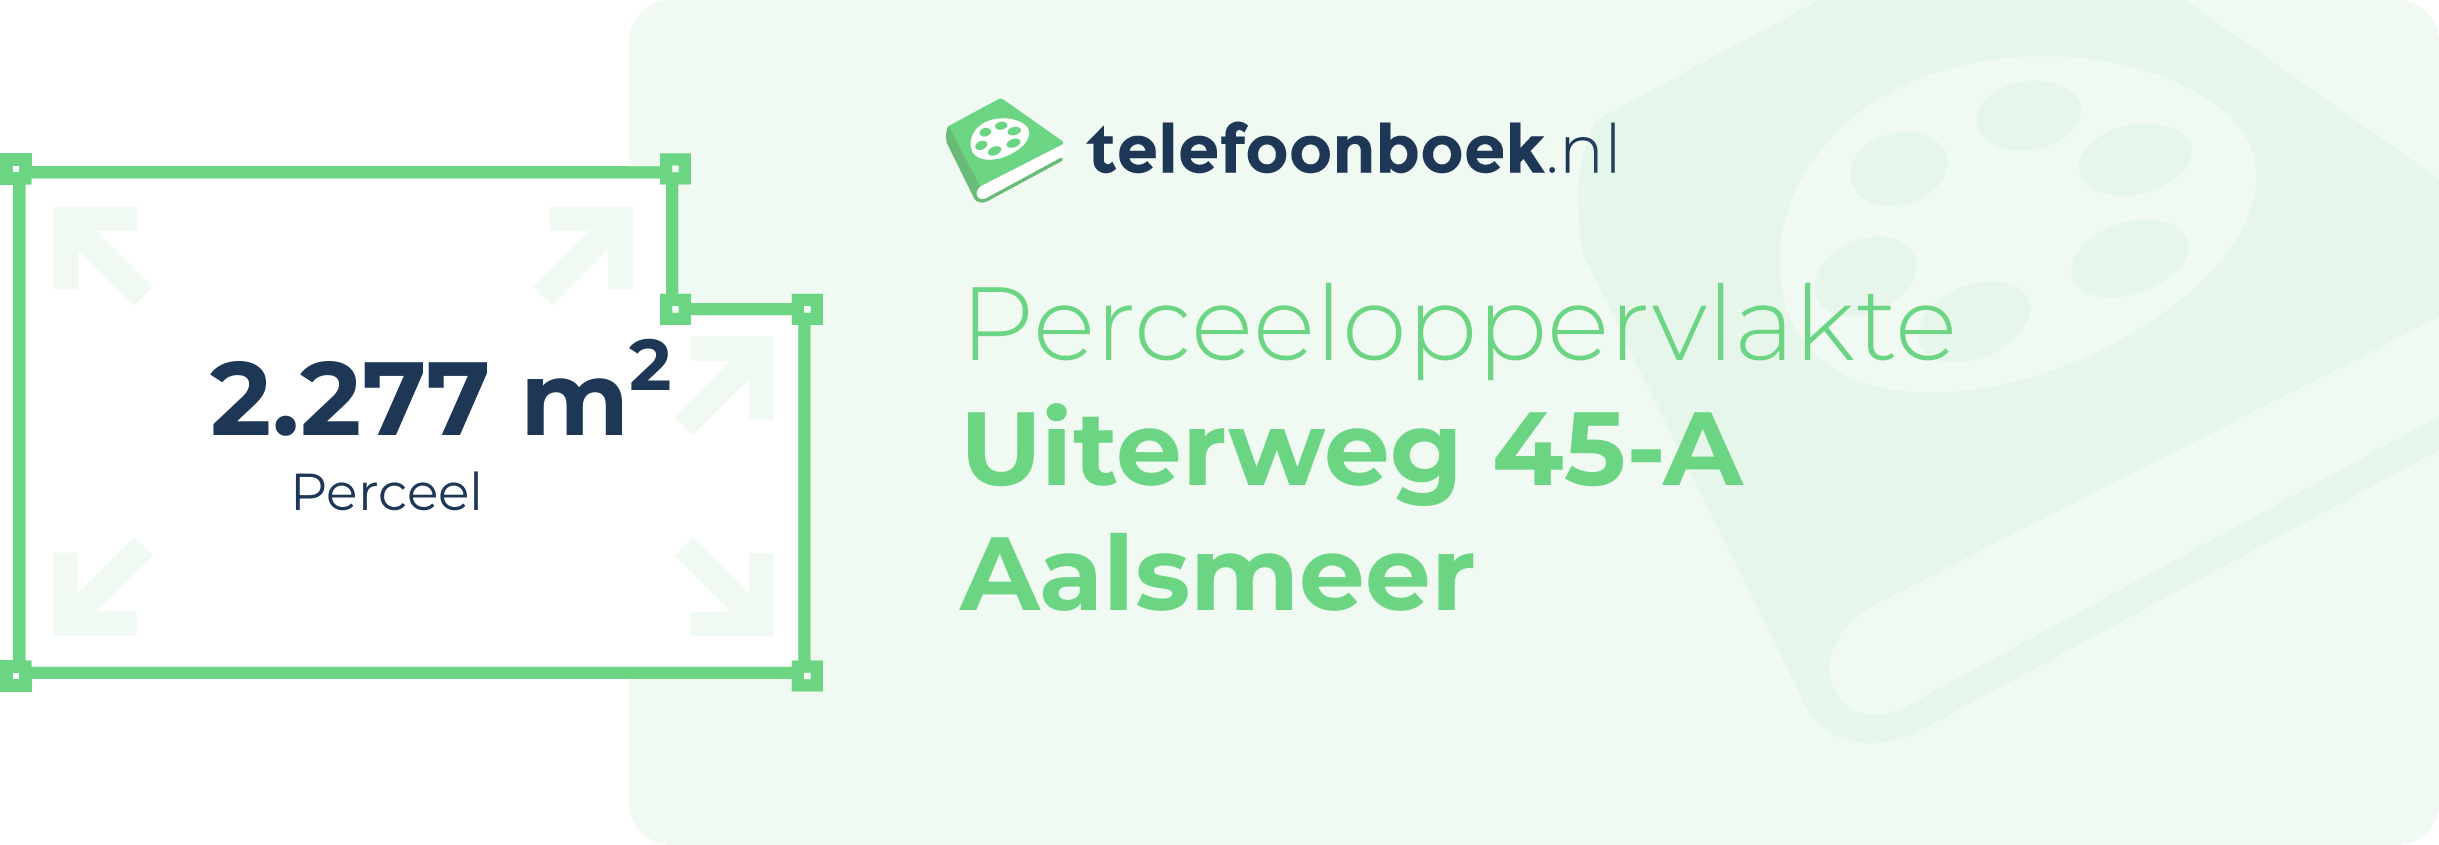 Perceeloppervlakte Uiterweg 45-A Aalsmeer